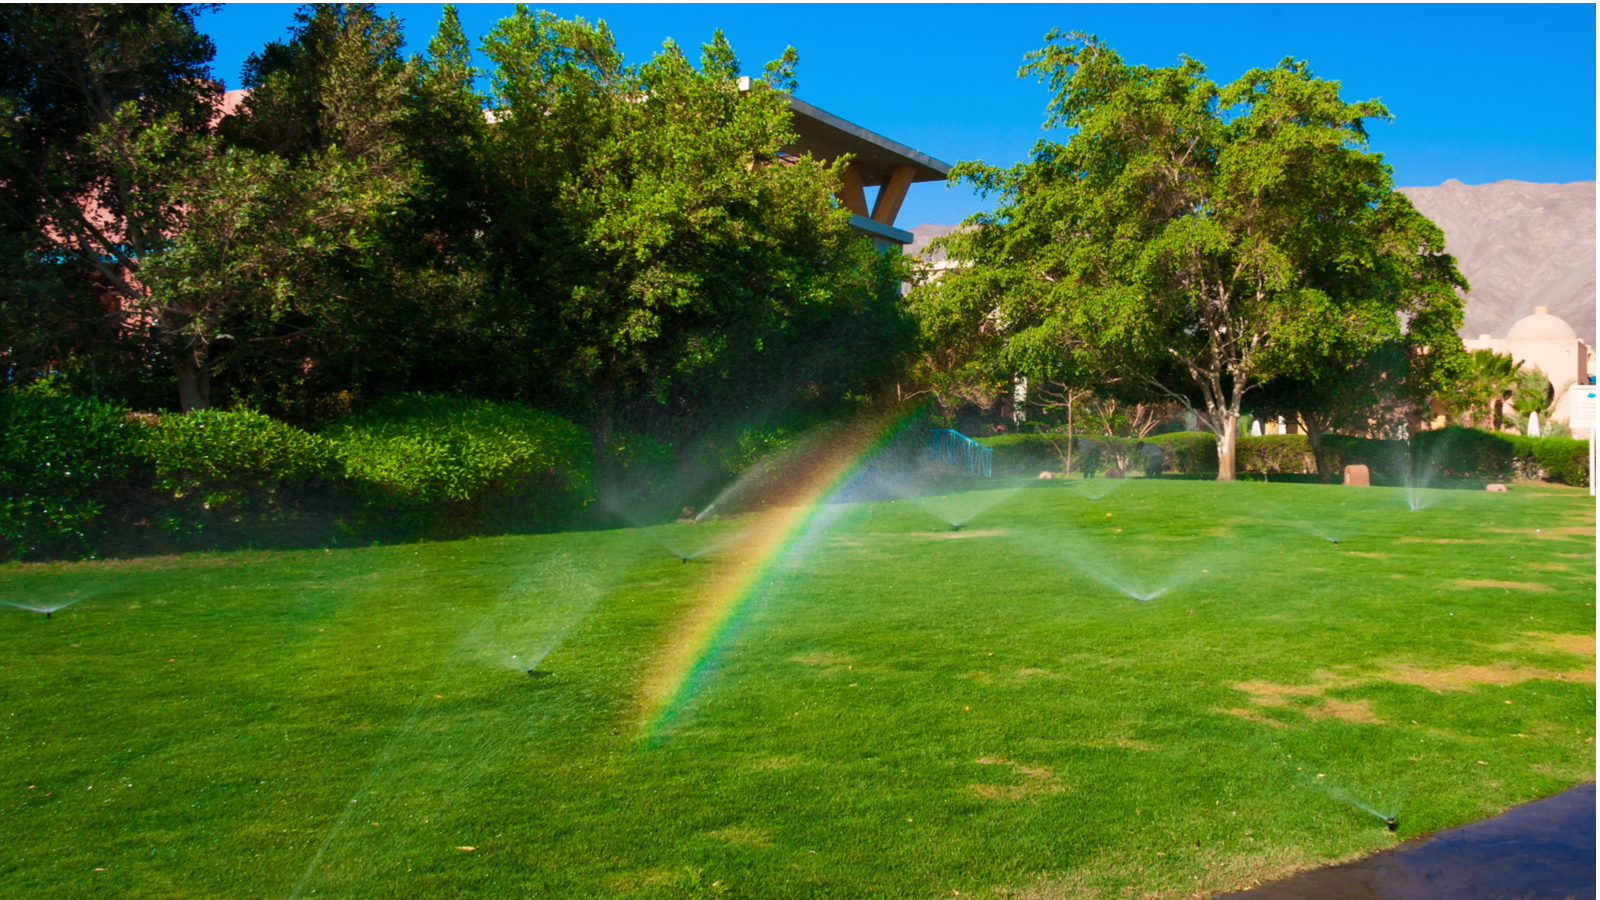 sprinkler-system-startup-Glendale-MO | Glendale, MO area sprinkler systems | Lawn Sprinklers of St. Louis